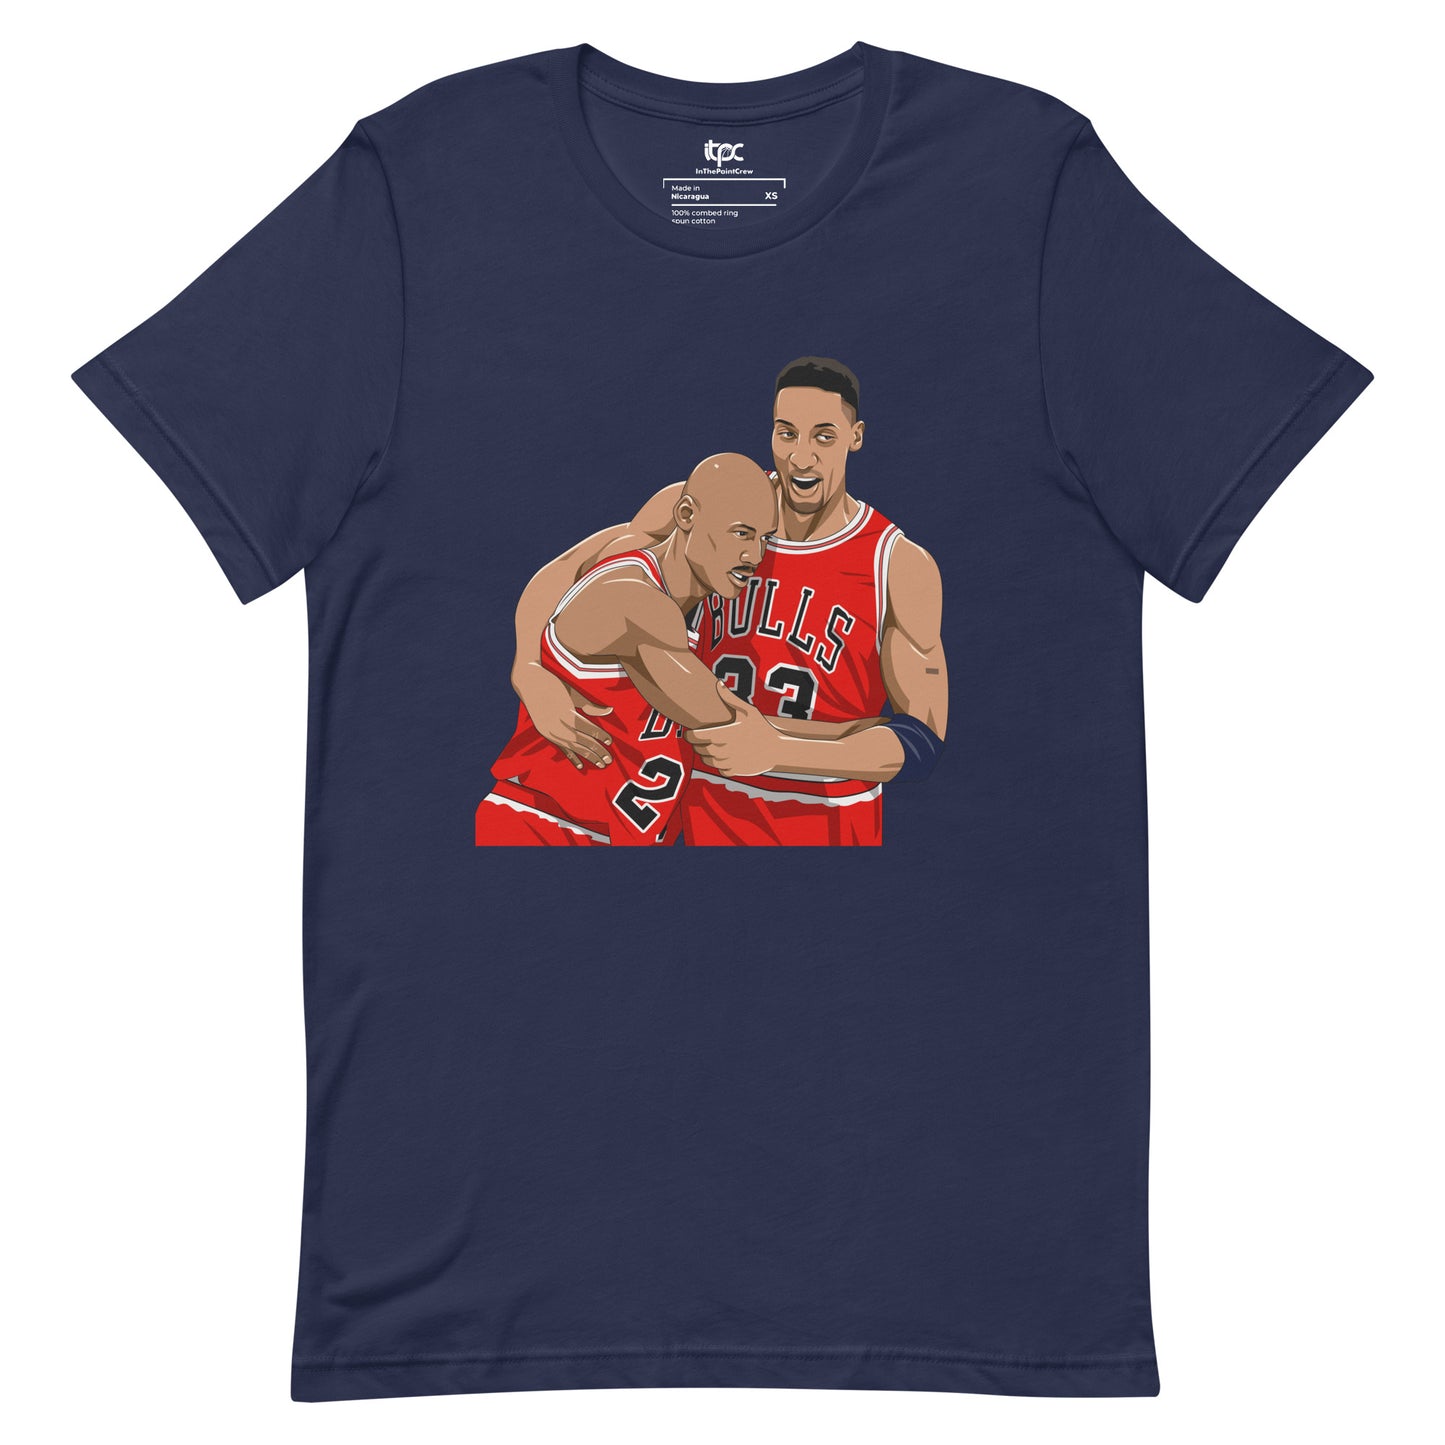 Michael Jordan and Scottie Pippen - "Flu Game" t-shirt